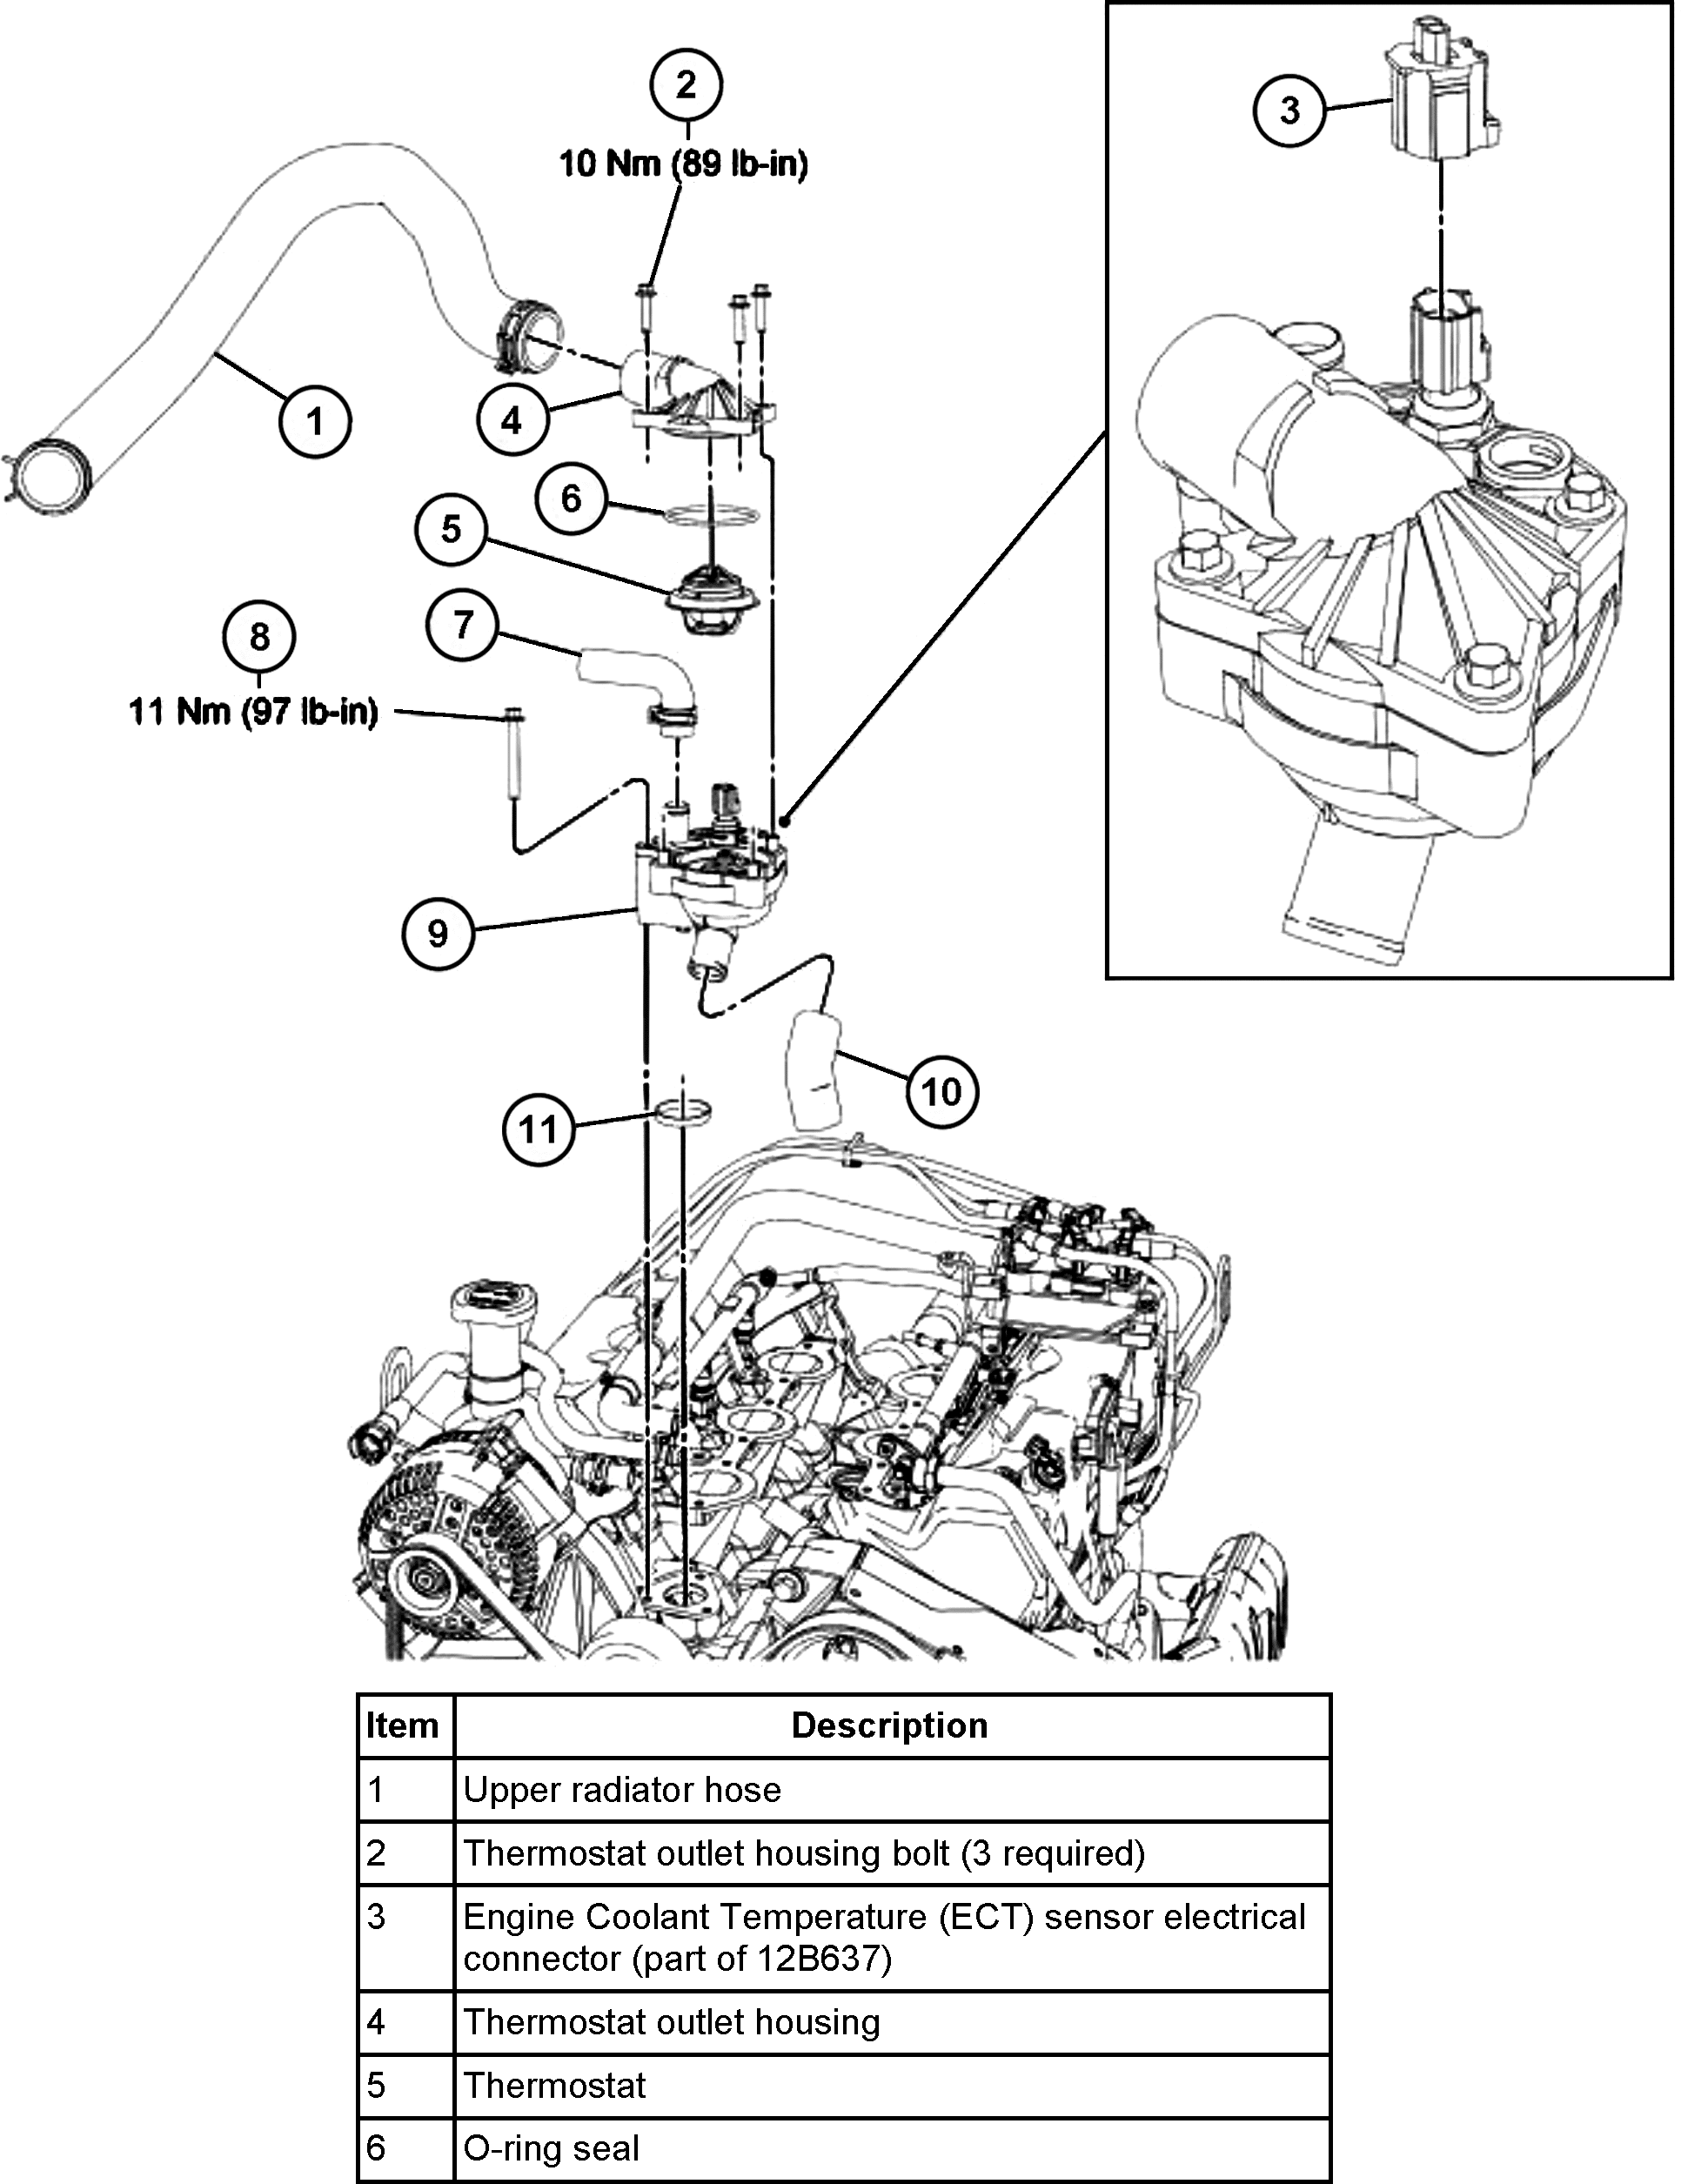 Diagram] Ford Ranger 40 Engine Diagram Full Version Hd